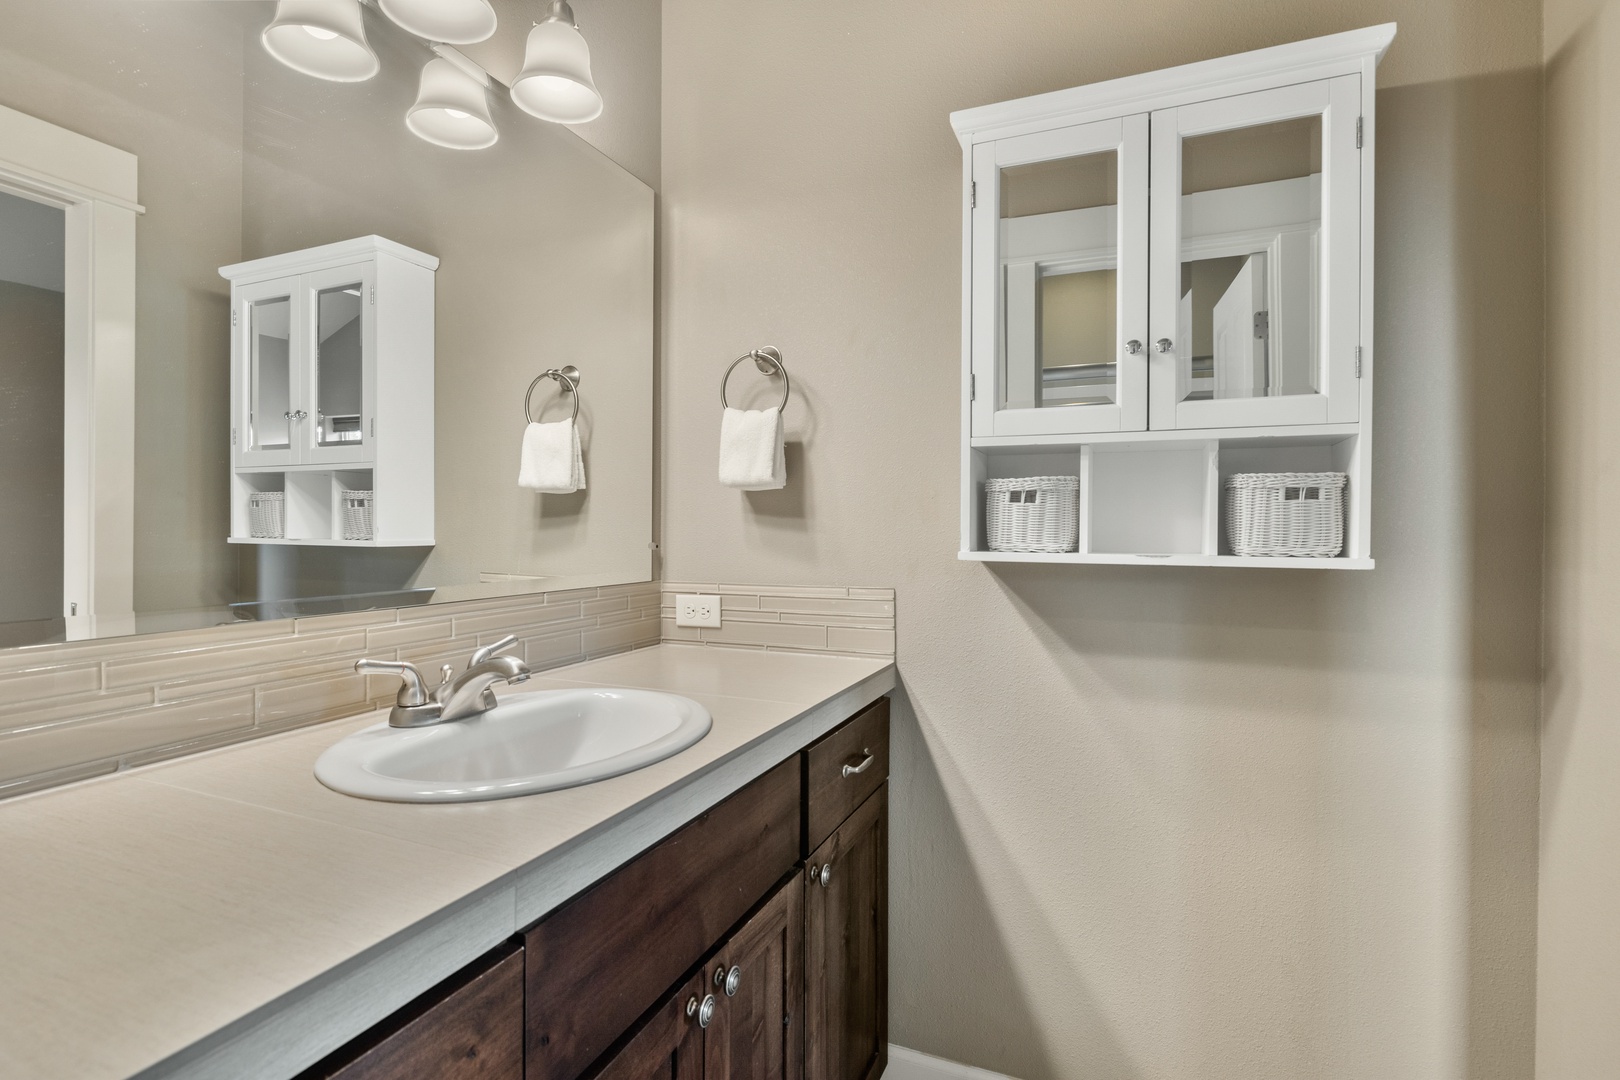 The master en suite includes an oversized single vanity & walk-in shower